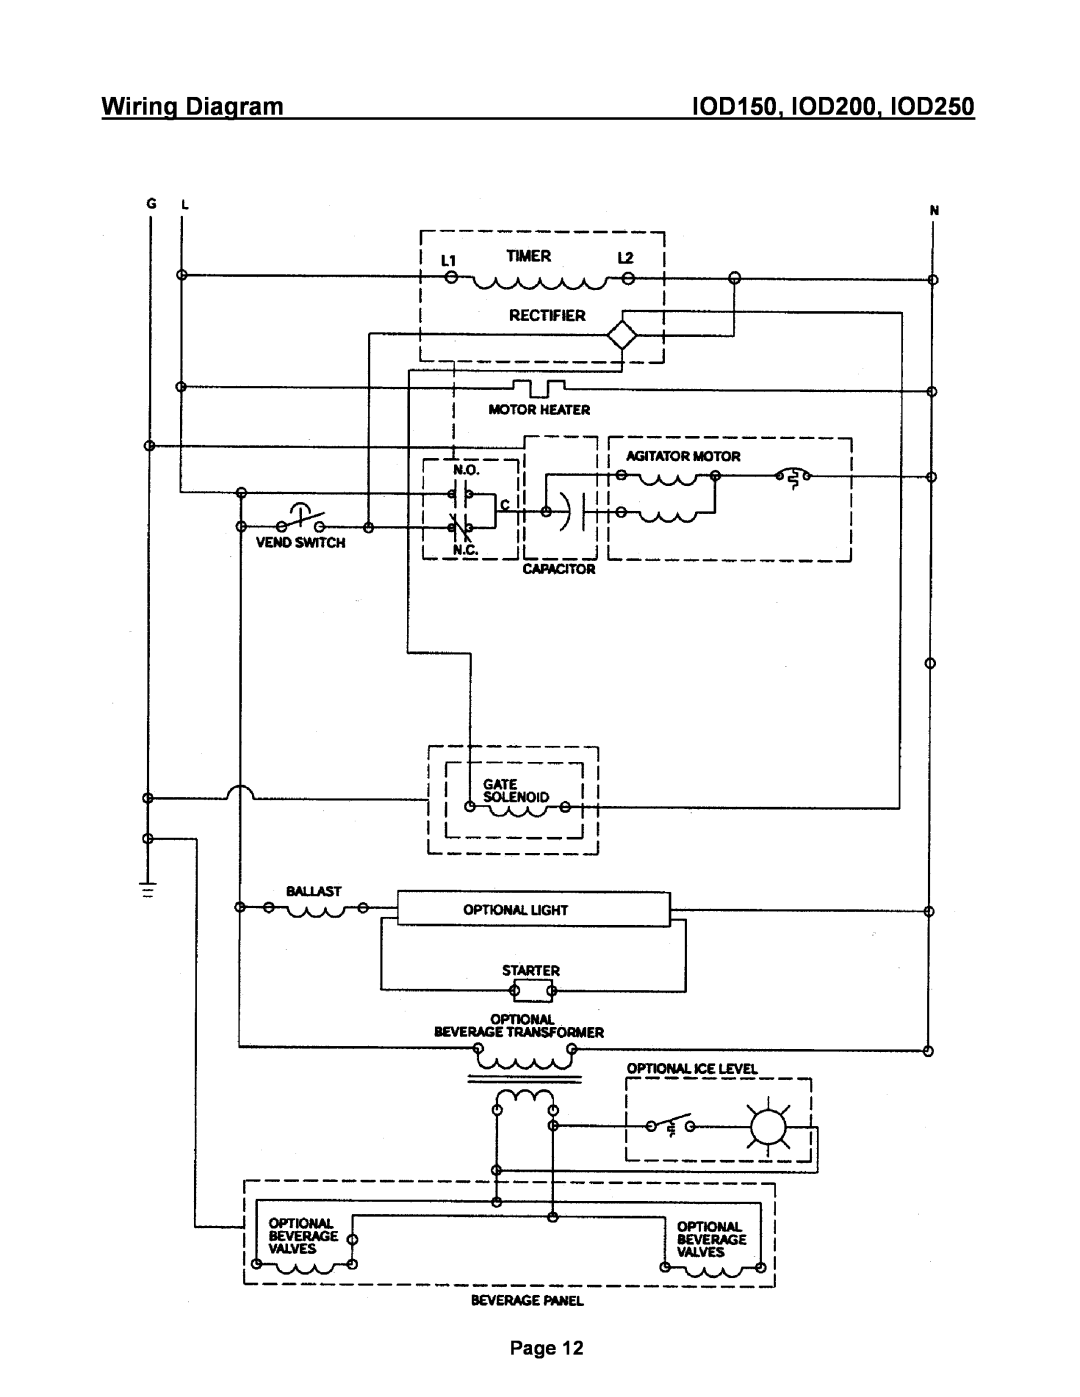 Ice-O-Matic installation manual Wiring Diagram, IOD150, IOD200, IOD250, Page 